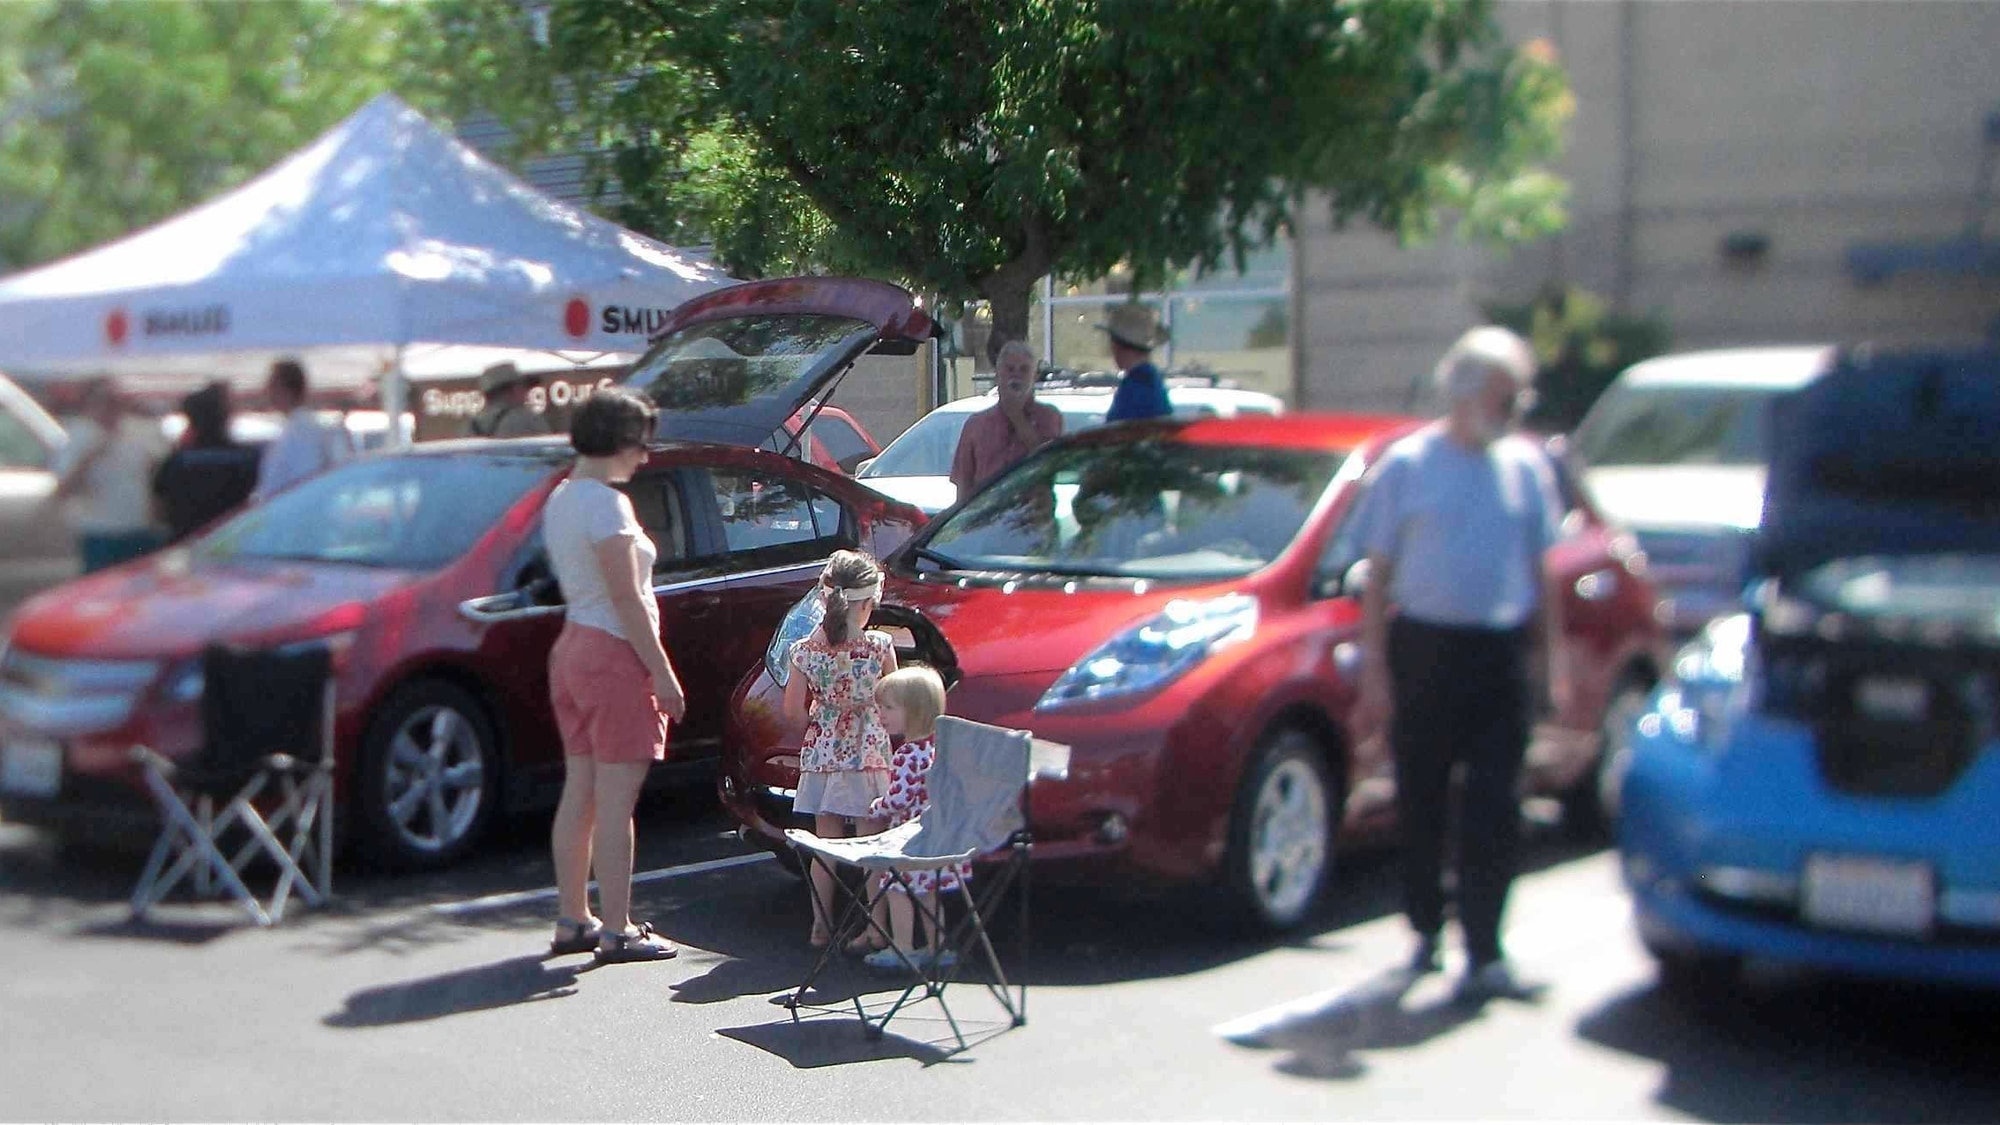 Sacramento Electric Vehicle Gathering, June 18, 2011